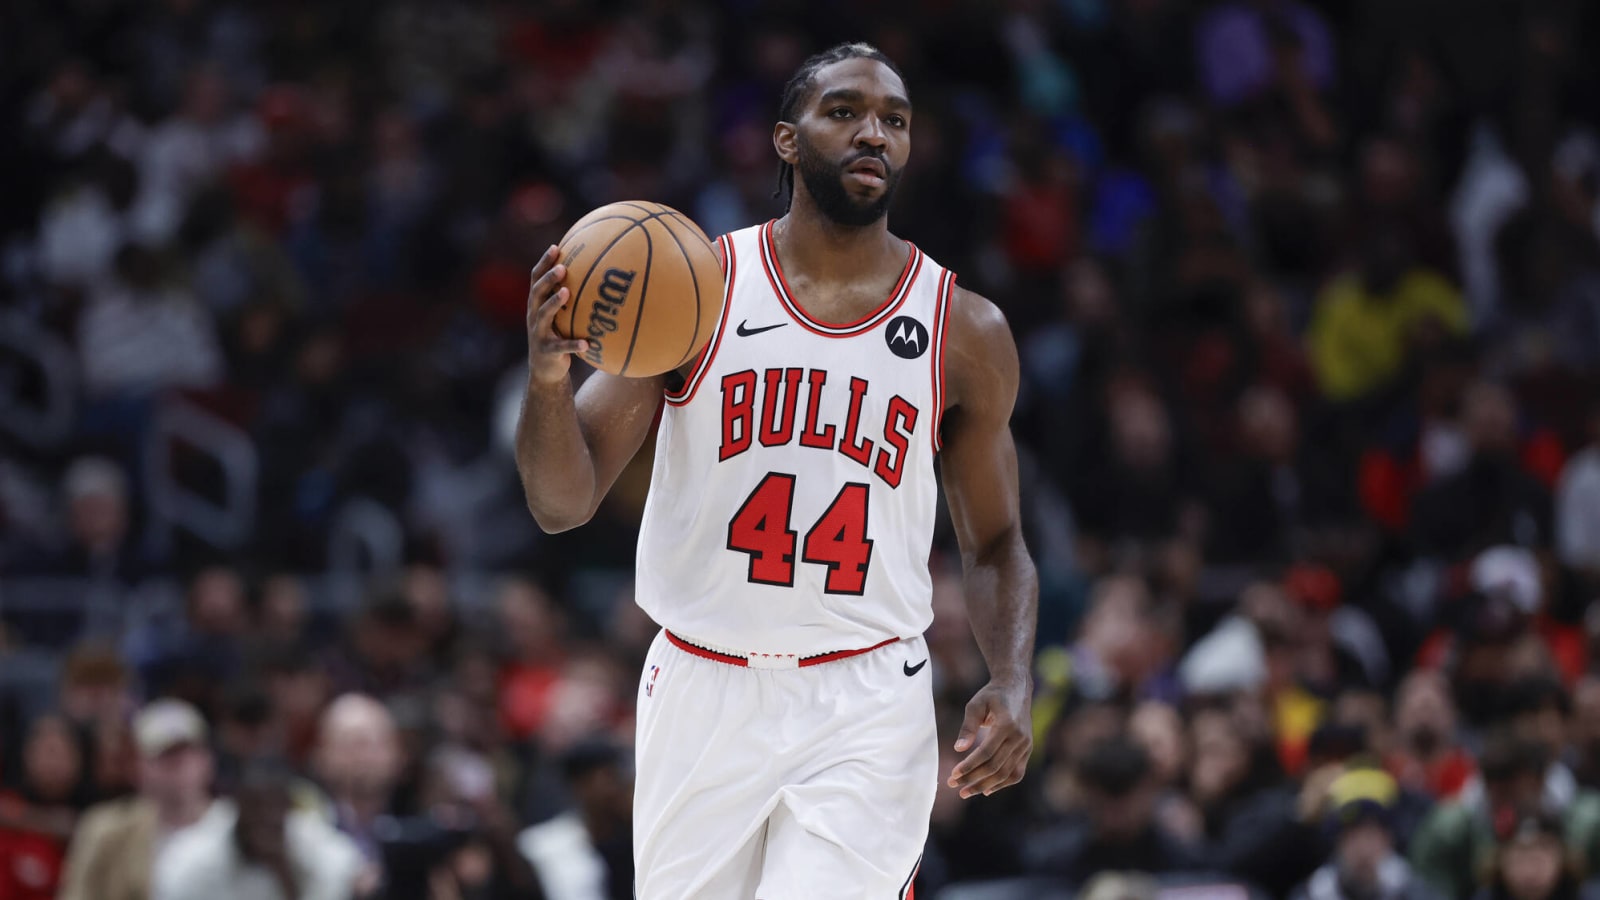 Bulls’ Patrick Williams To Undergo Season-Ending Surgery